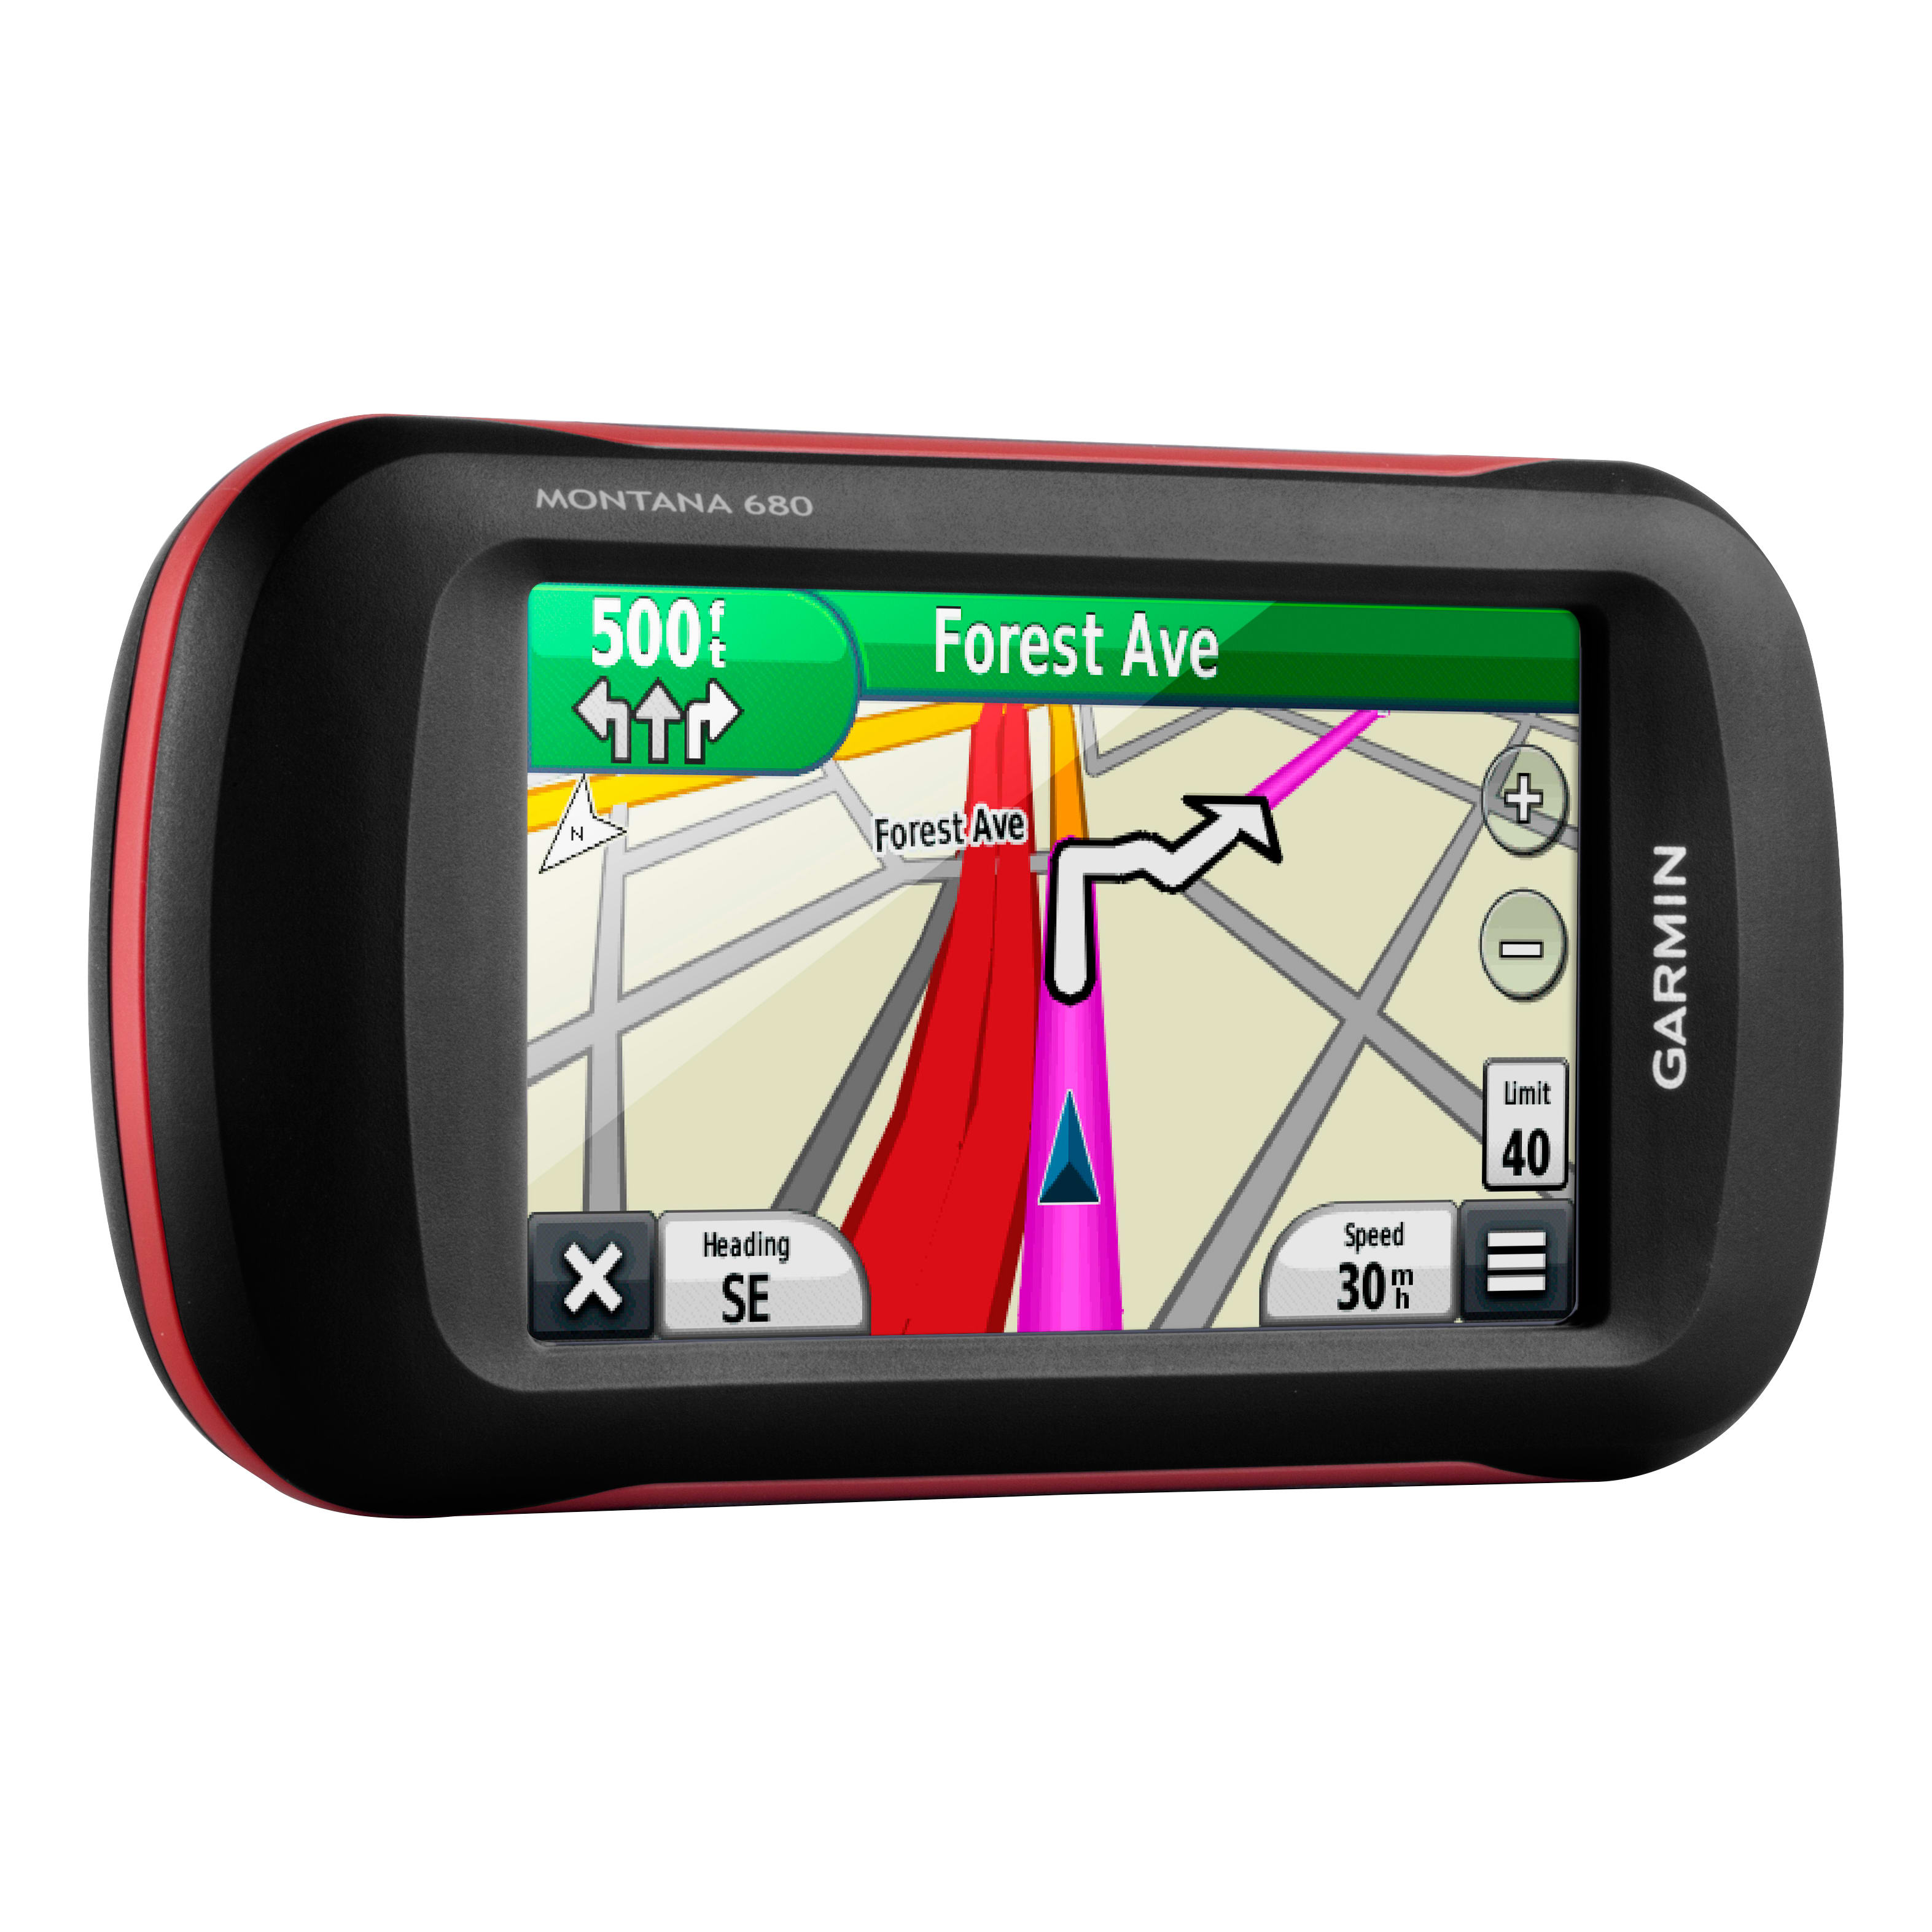 Garmin® Montana® 680 Handheld GPS - Alternate View 2